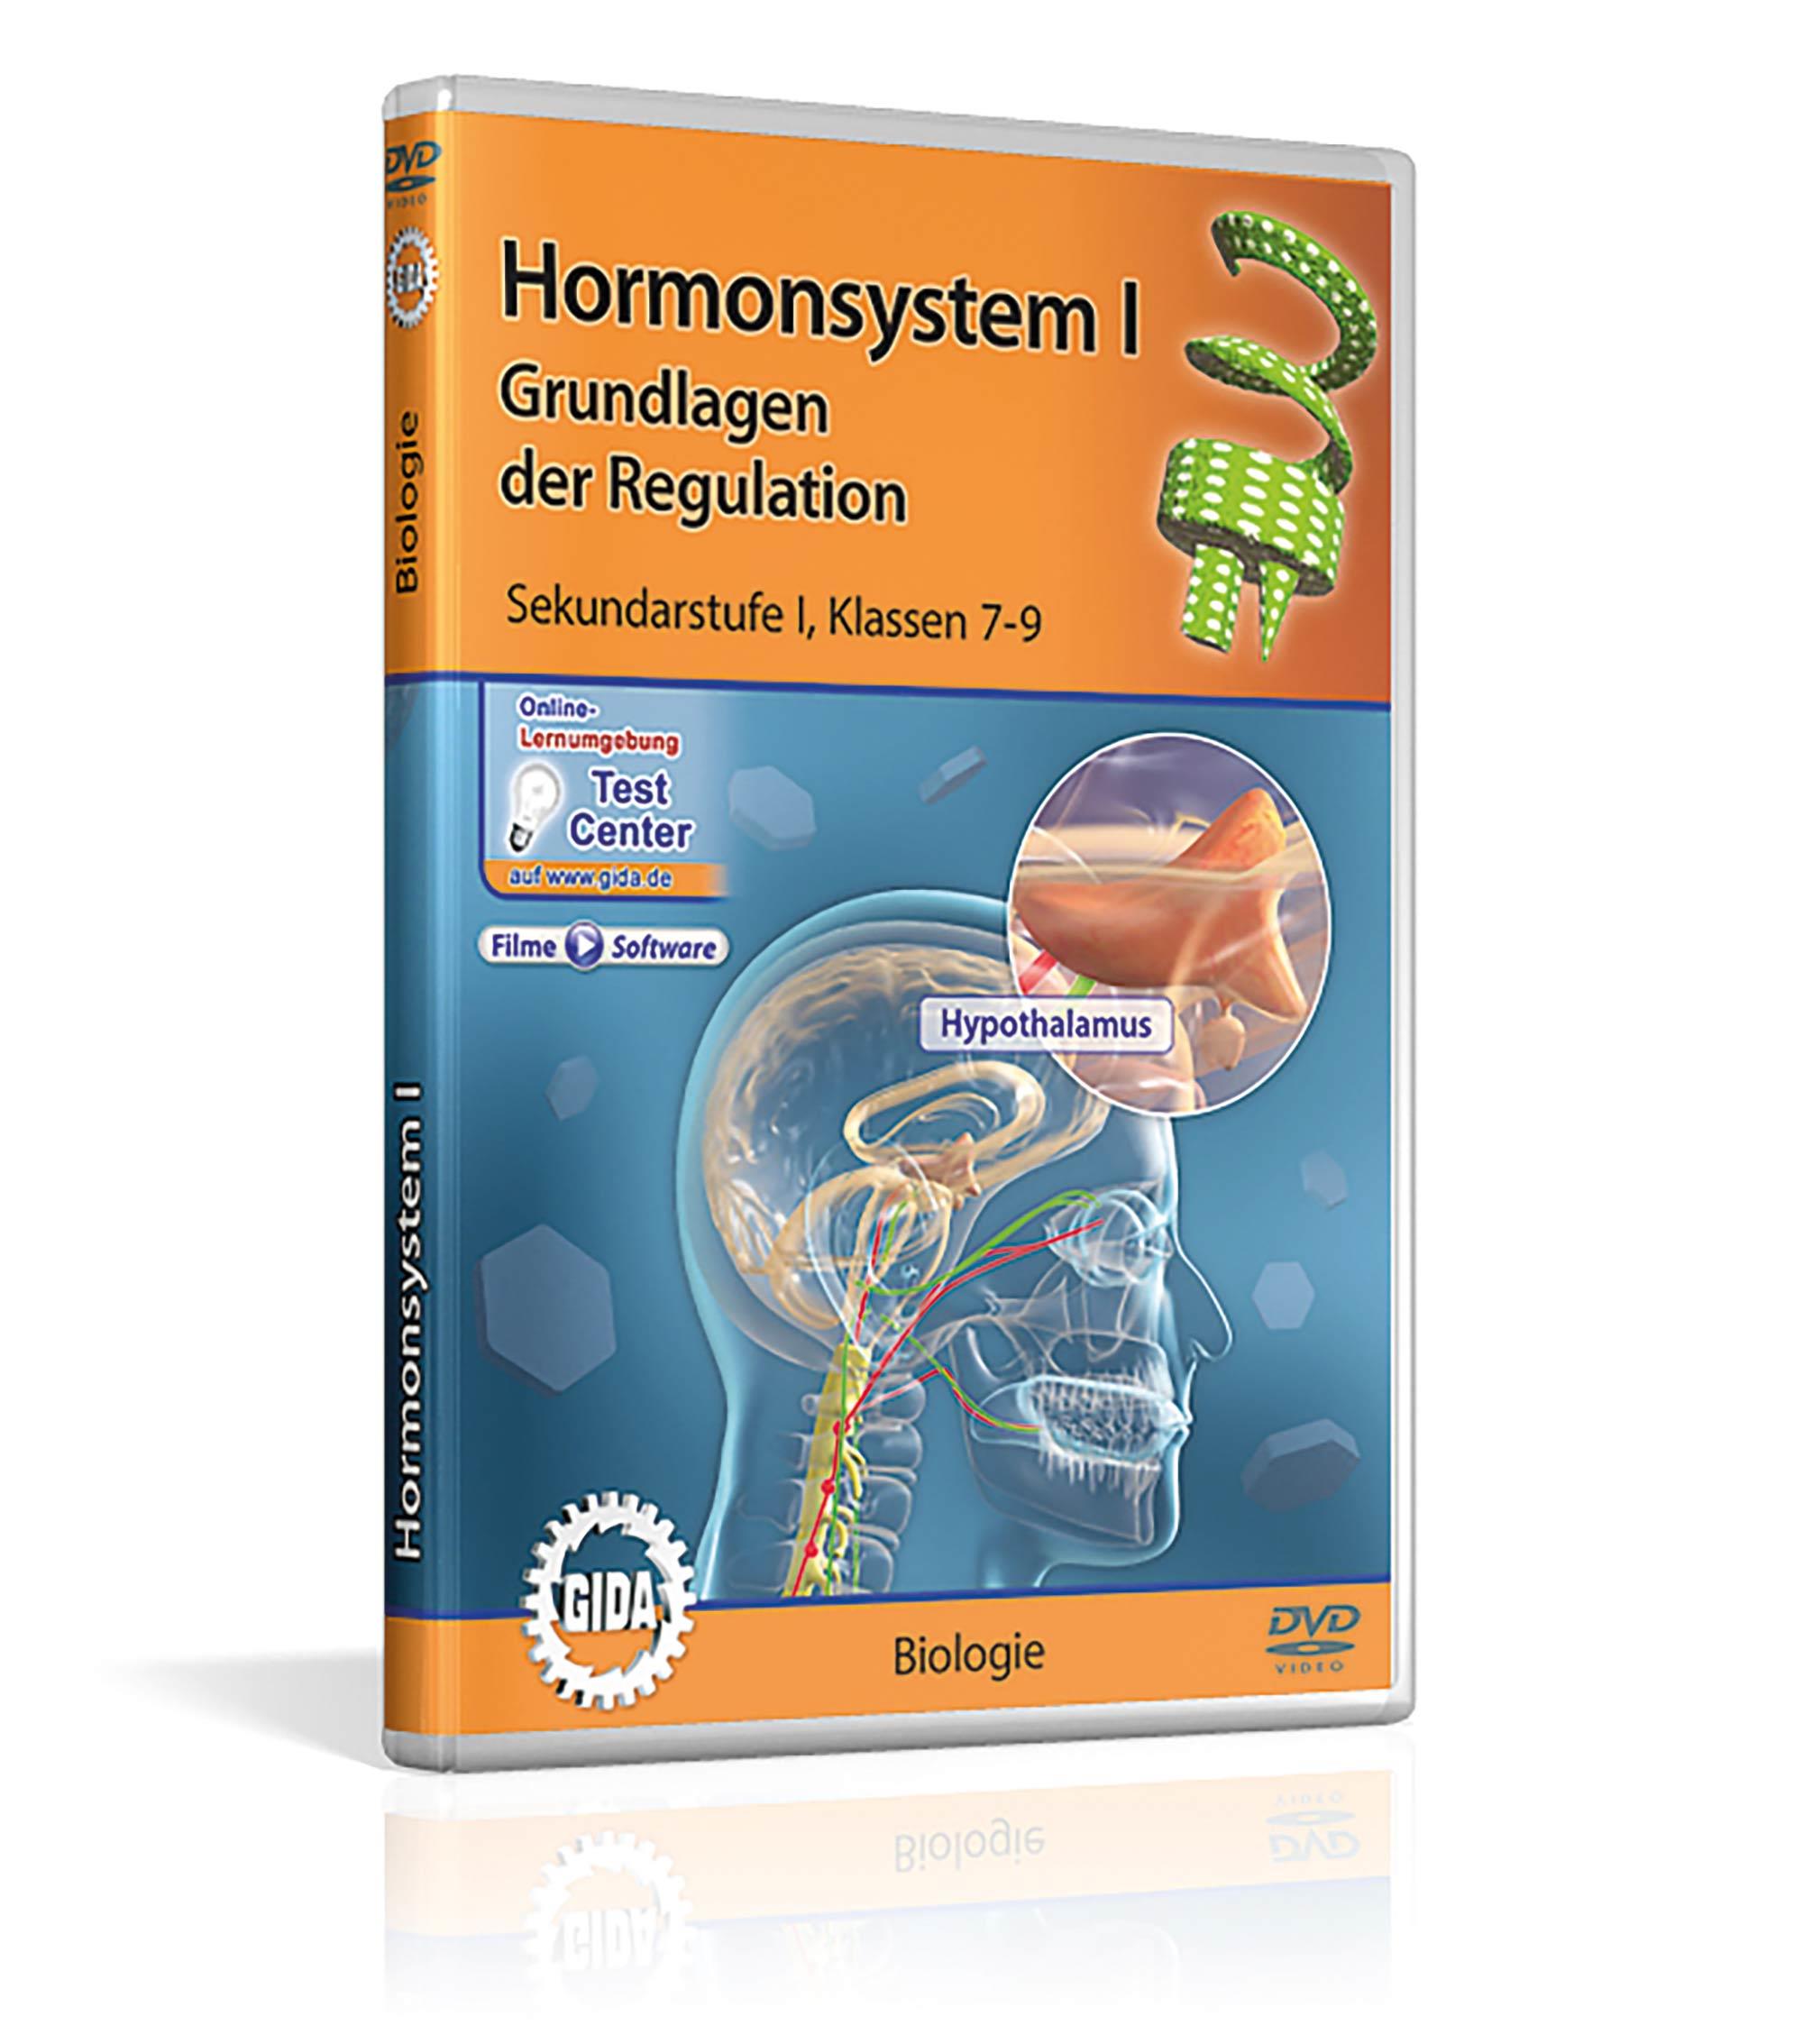 Hormonsystem I: Grundlagen der Regulation